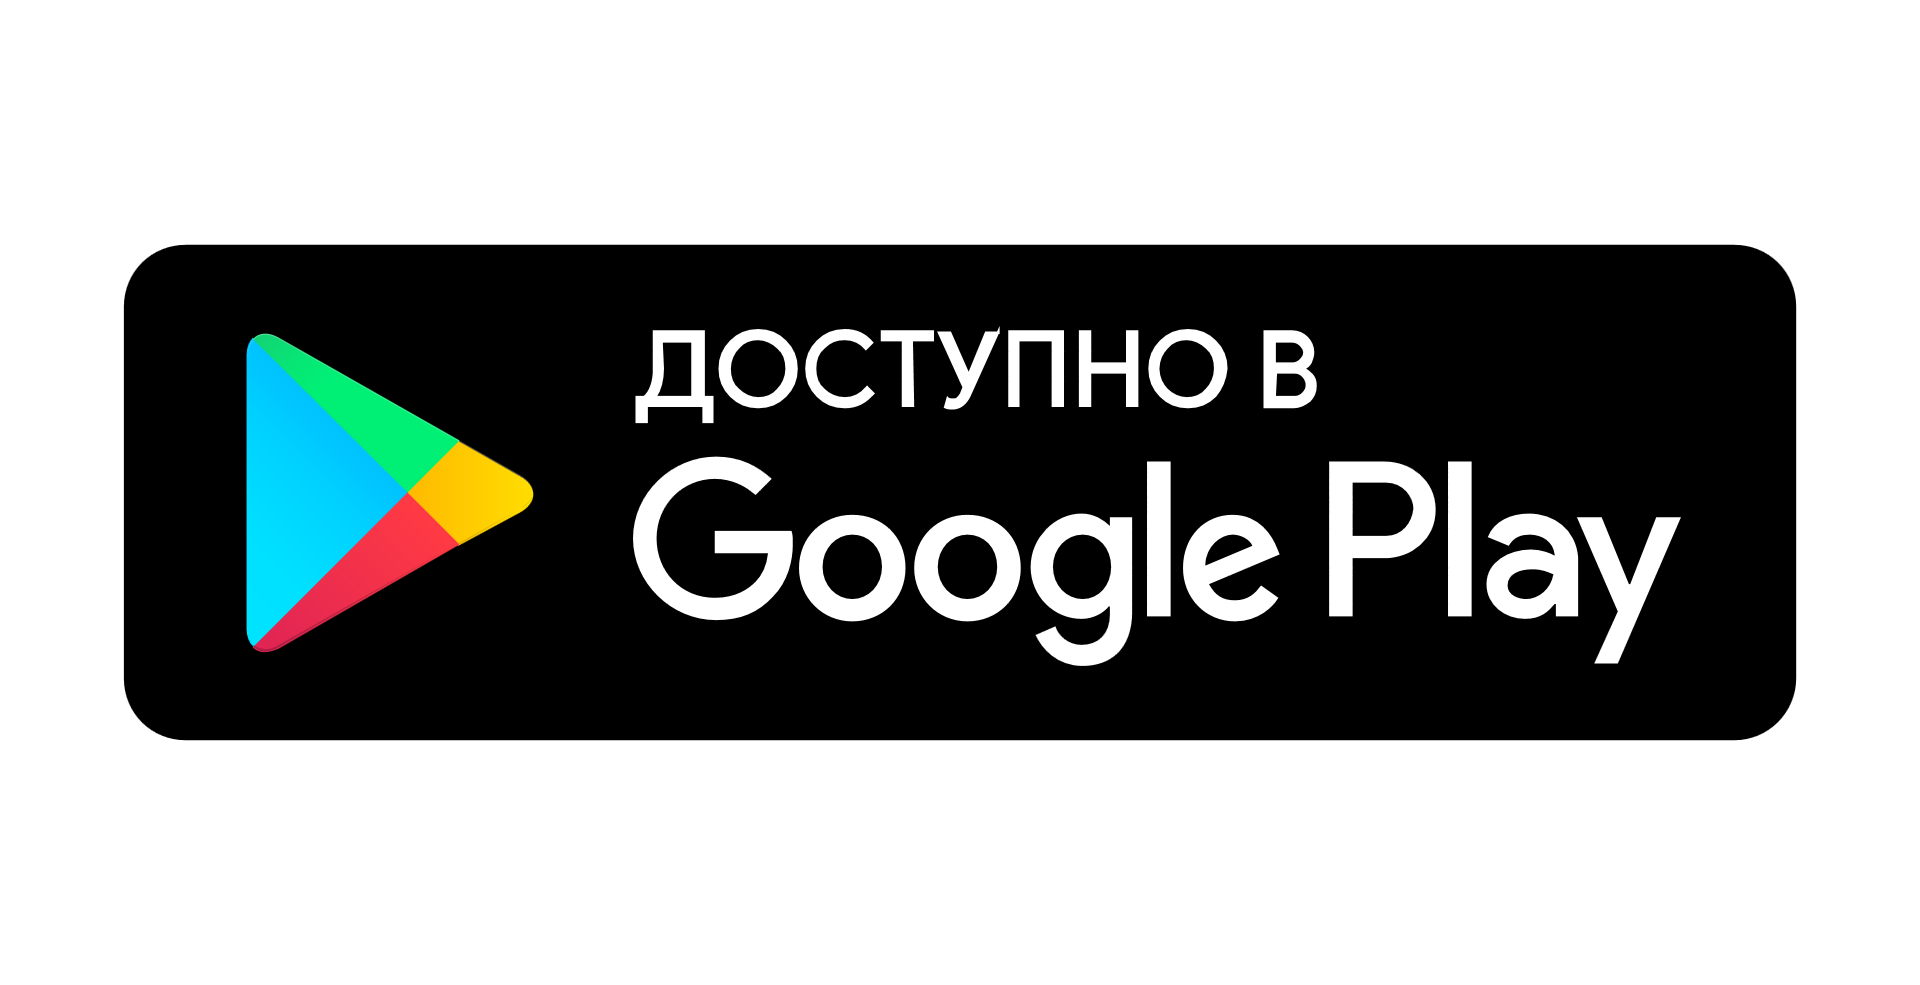 Google play ota. Гугл плей. Логотип Google Play. Доступно в гугл плей. Доступно в гугл плей иконка.